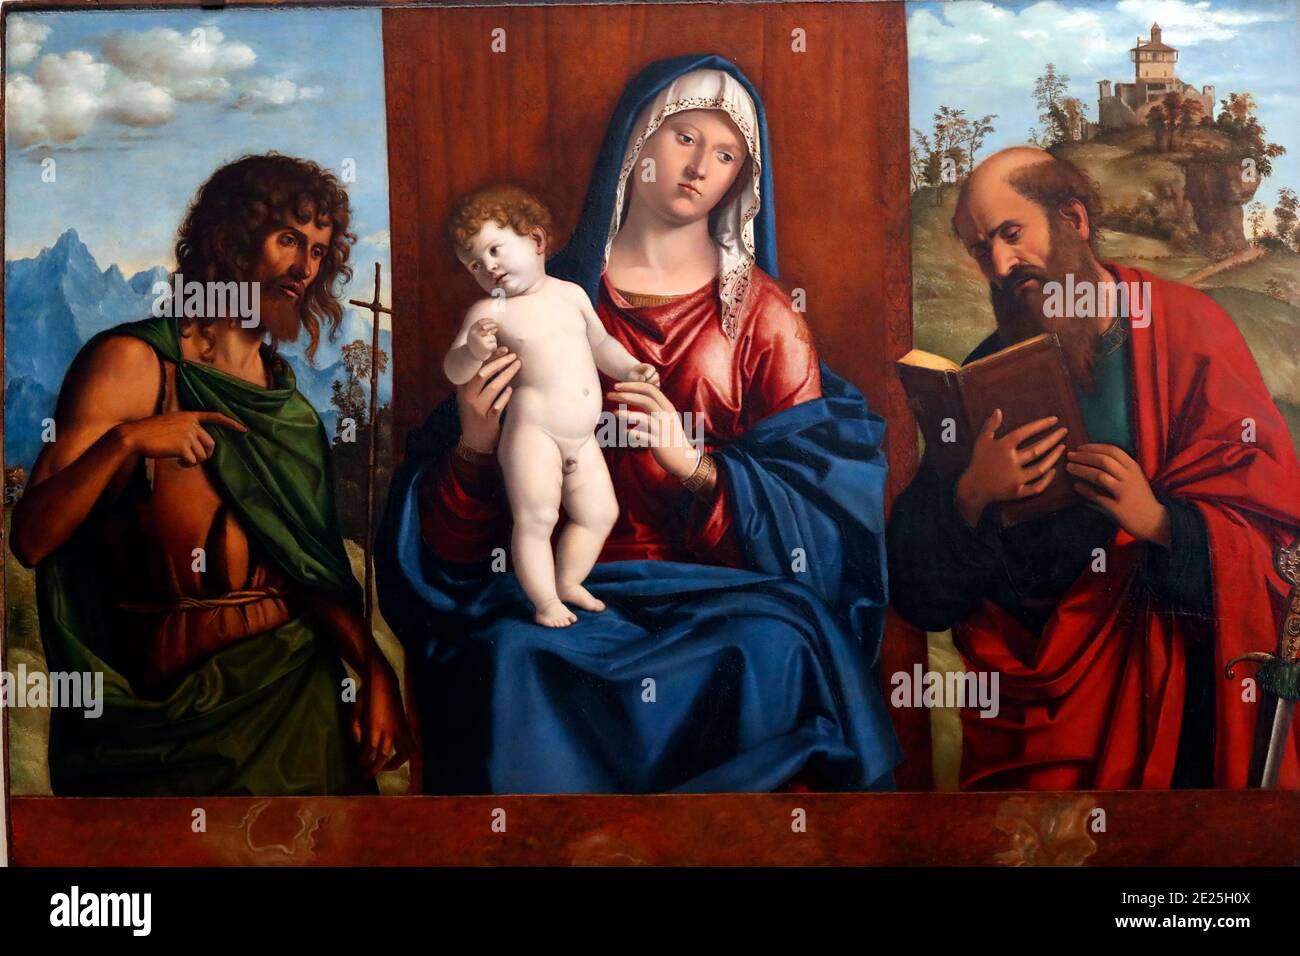 Gallerie dell'Accademia. Madonna and Child with Saint Paul and Saint George, by Giambattista Cima da Conegliano. Wood panel. 16 th century. Stock Photo